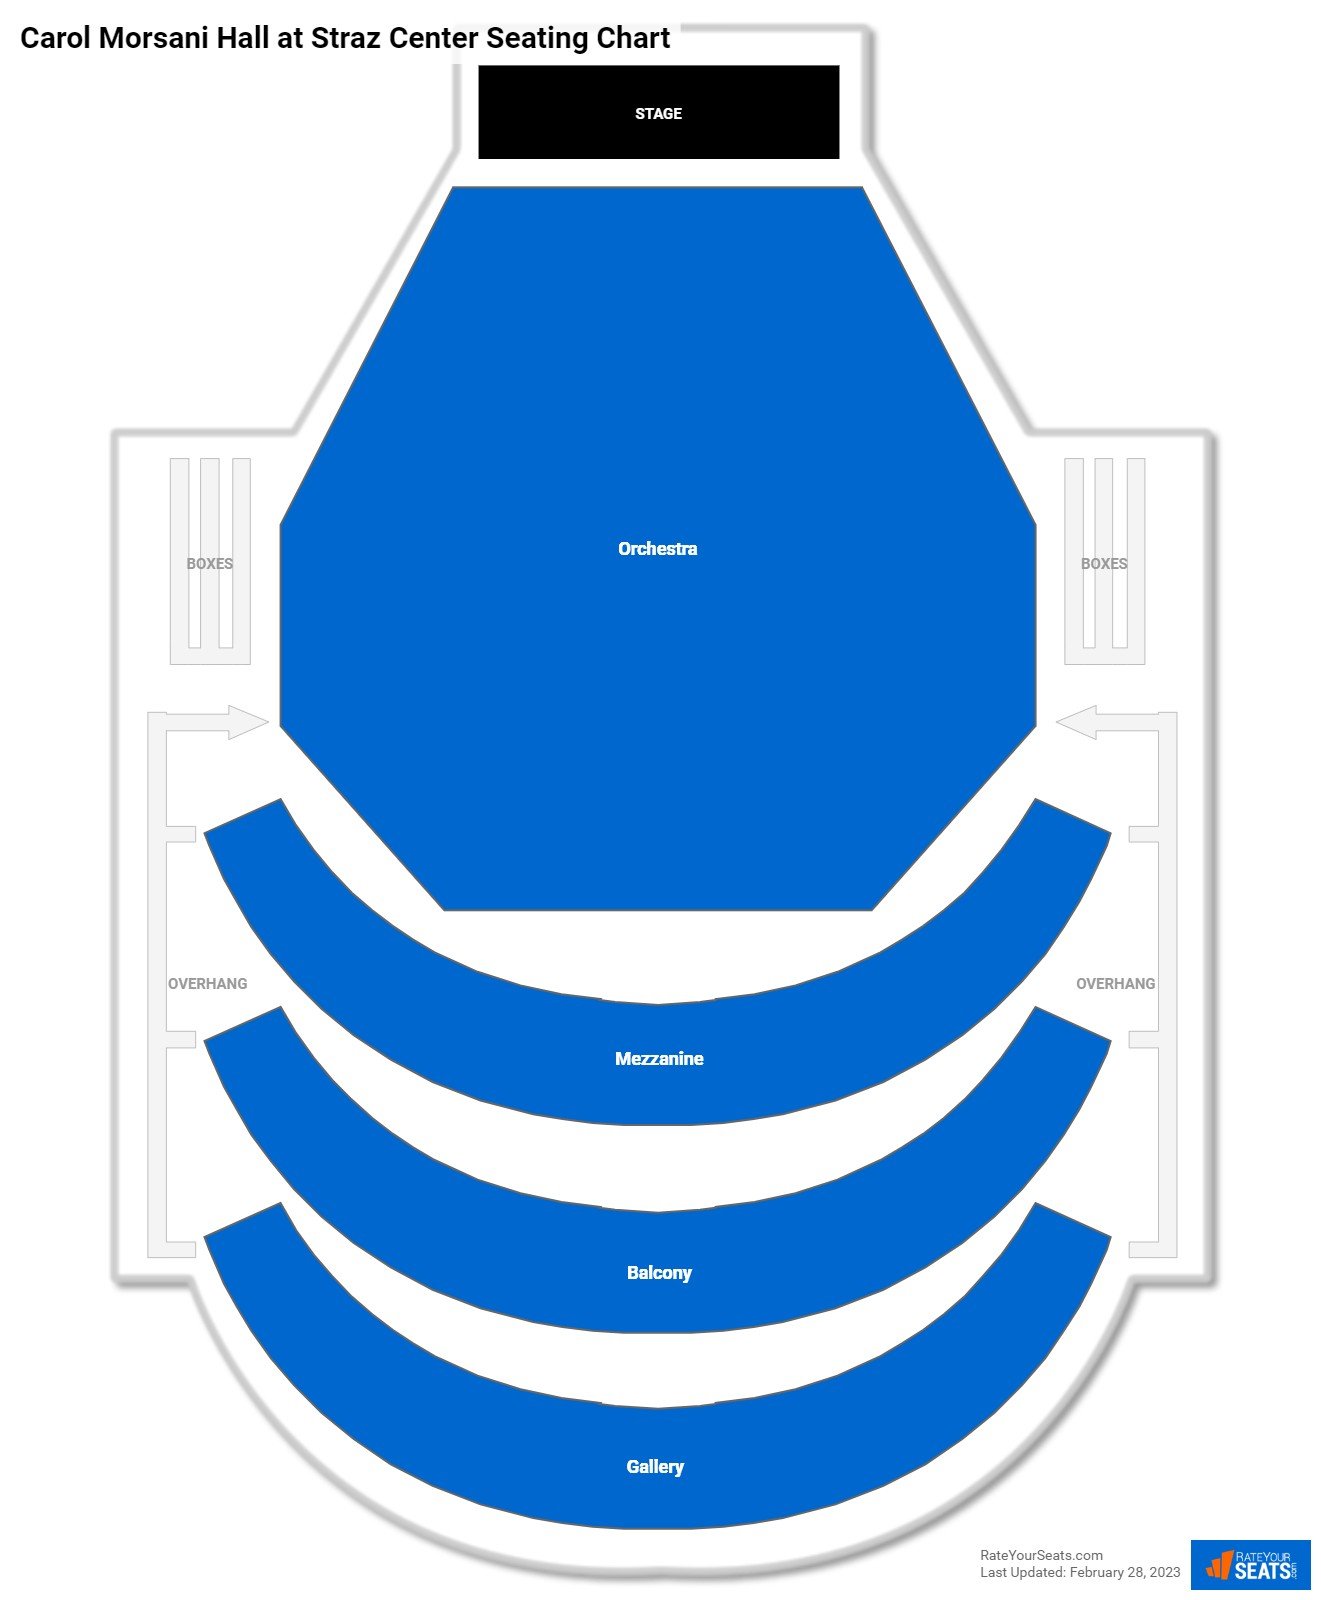 Carol Morsani Hall at Straz Center Theater Seating Chart